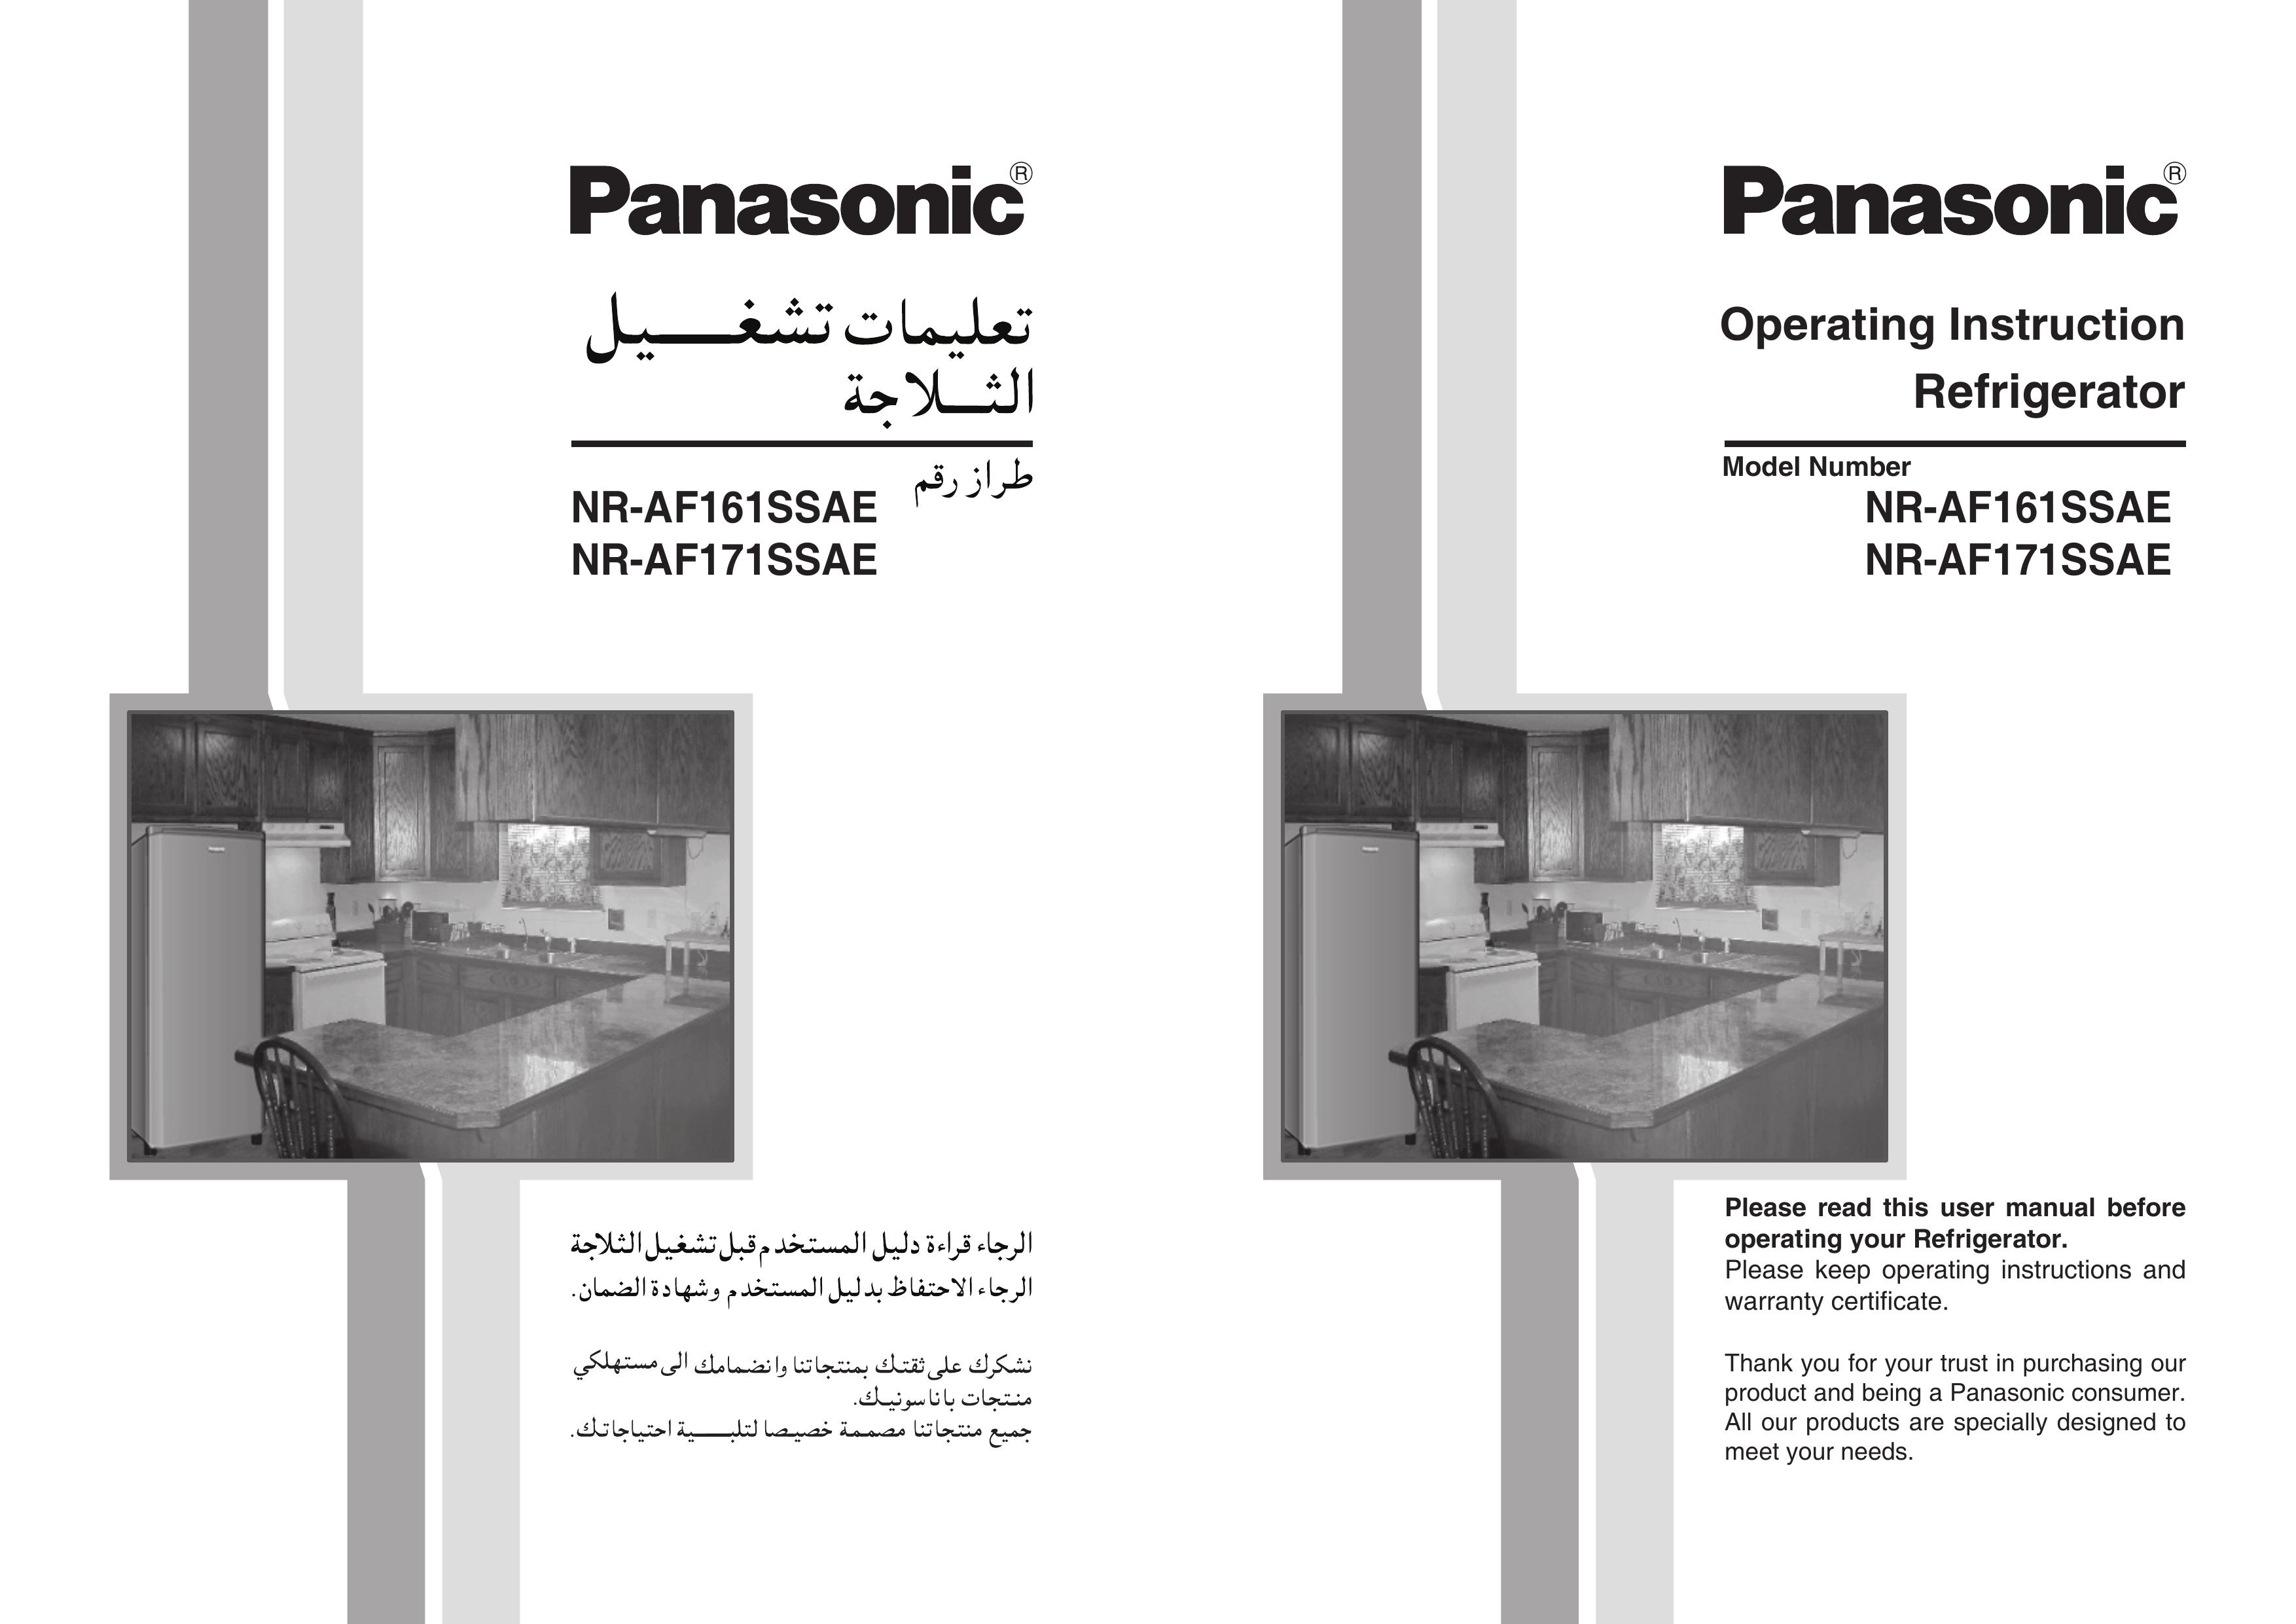 Panasonic NR-AF171SSAE Refrigerator User Manual